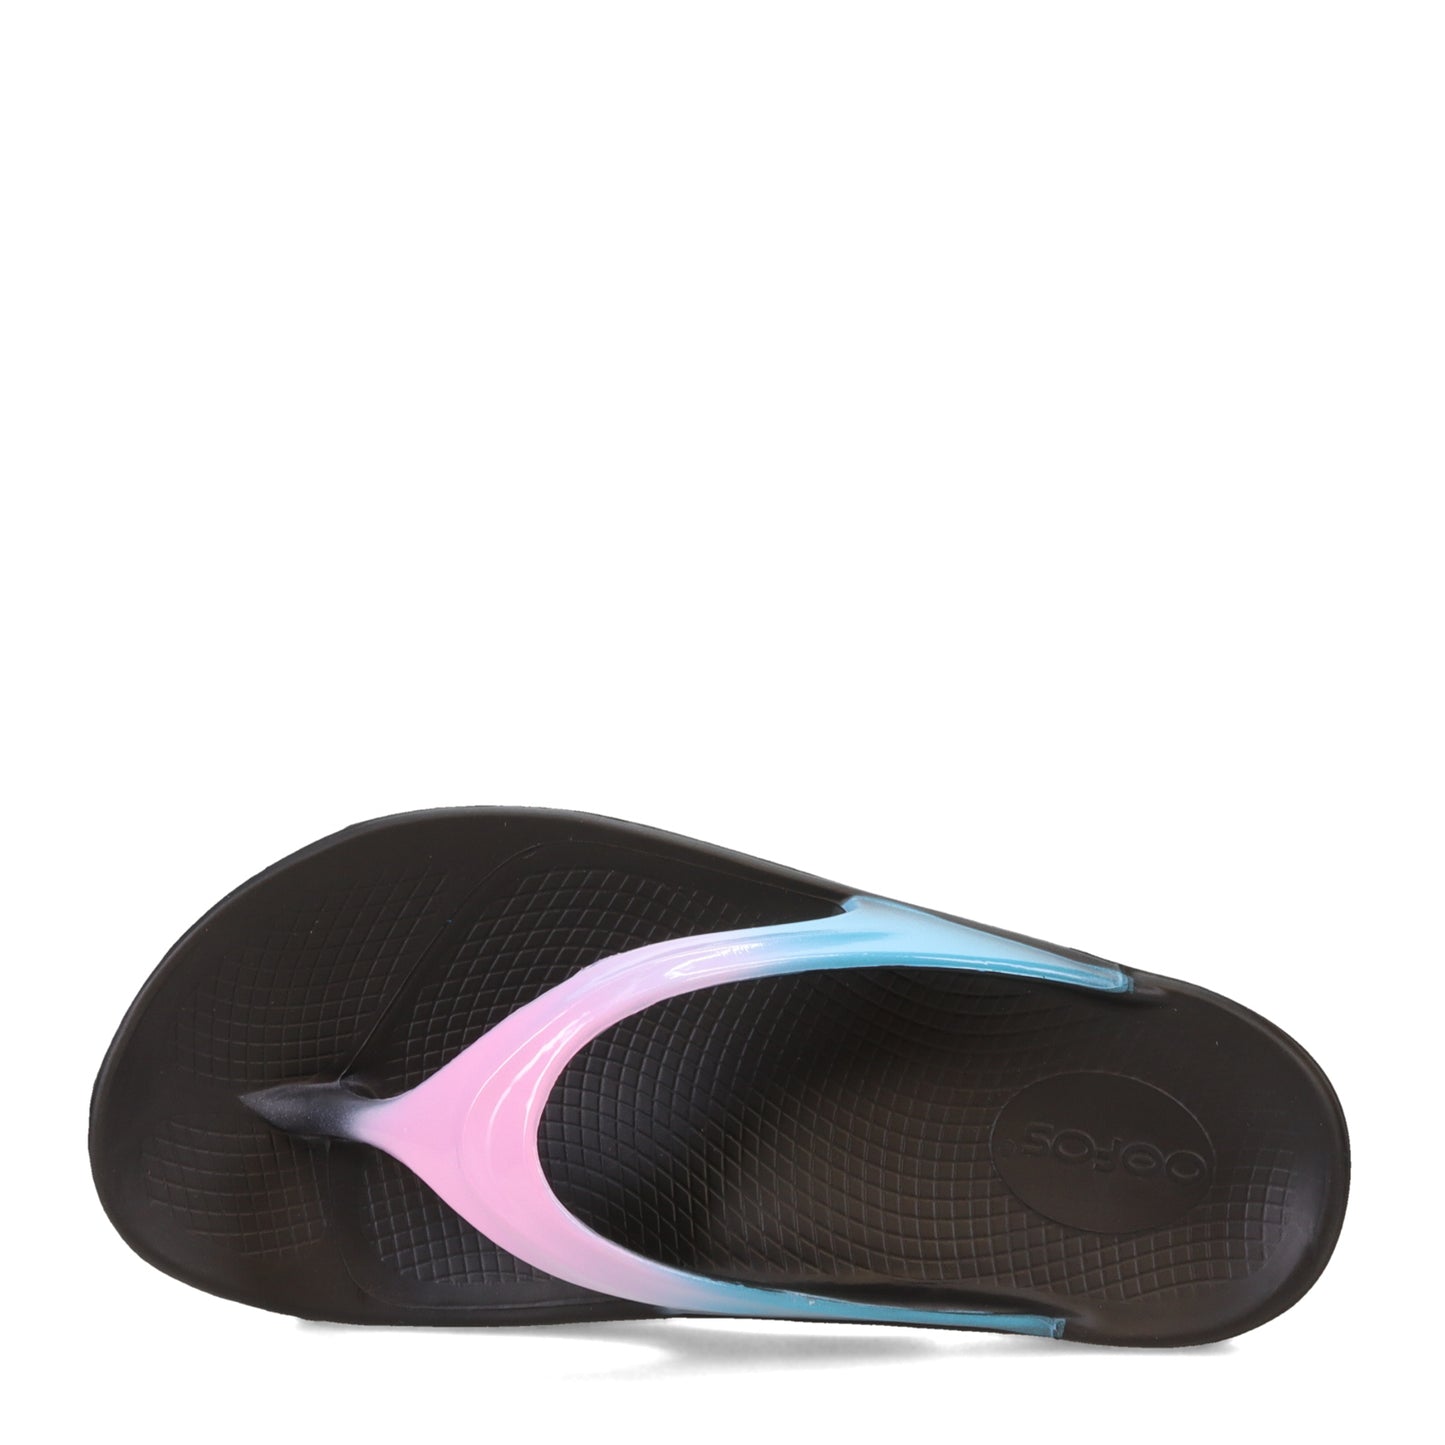 Peltz Shoes  Women's Oofos OOlala Sandal Cotton Candy 1401-COTTON